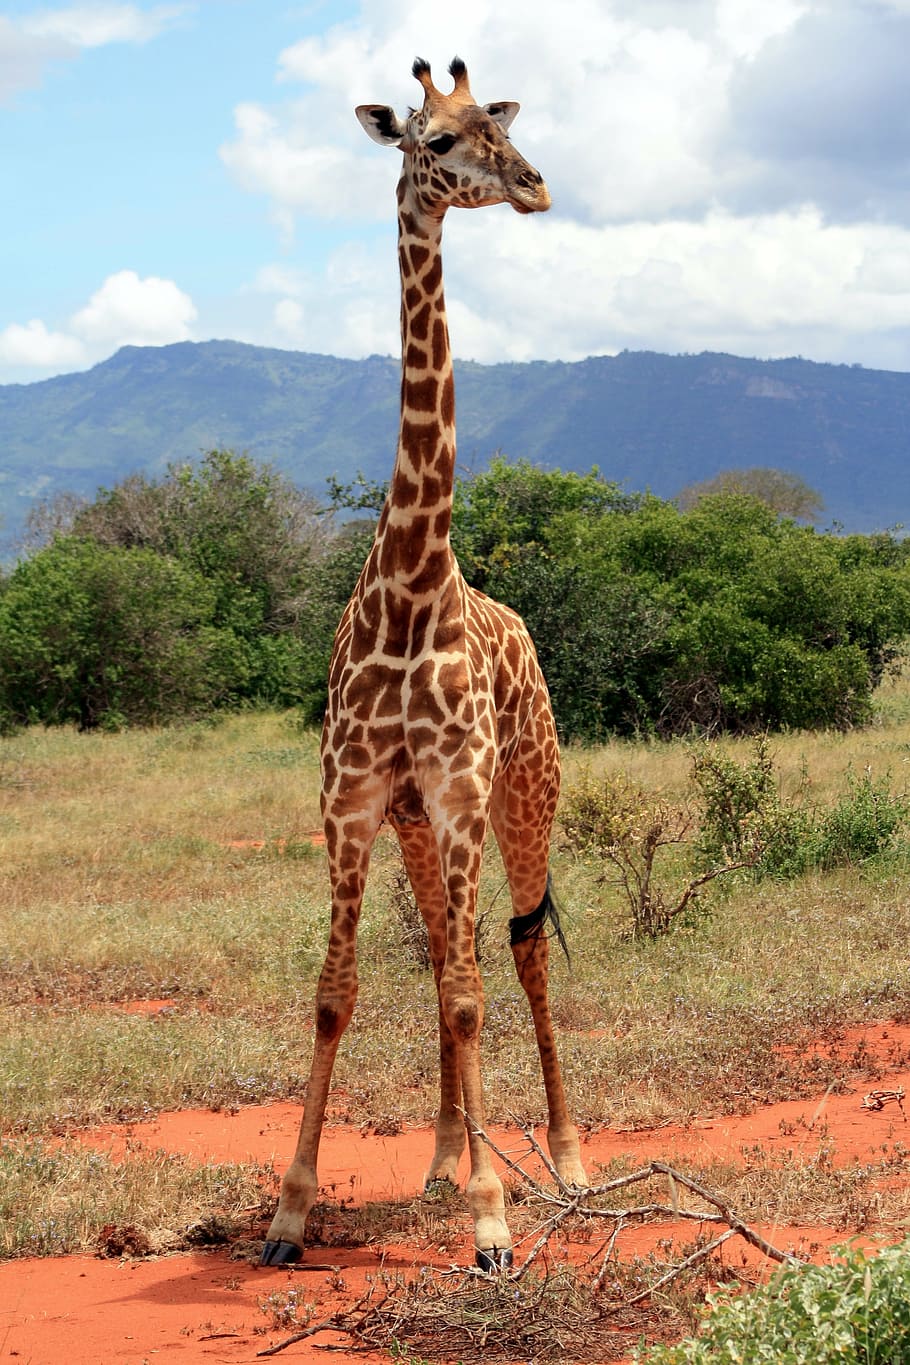 giraffe, africa, national park, safari, kenya, animals in the wild, animal wildlife, animal, animal themes, mammal